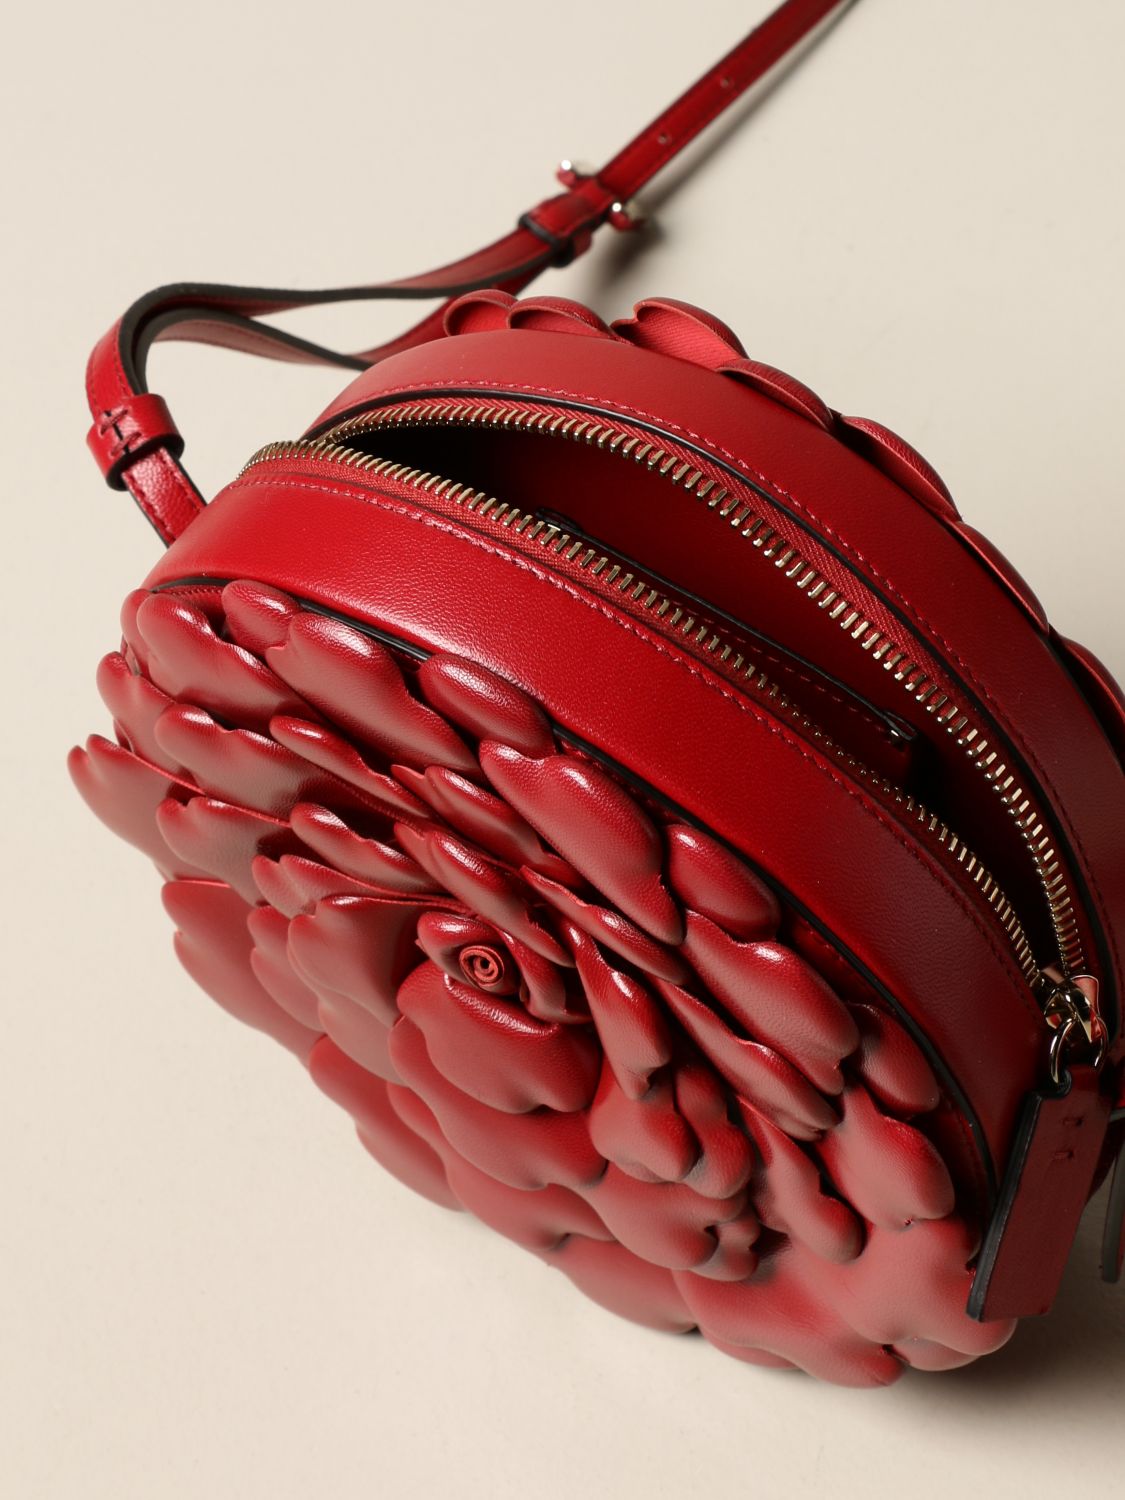 Valentino Garavani Atelier Bag 03 Oro Rose Edition Red Leather